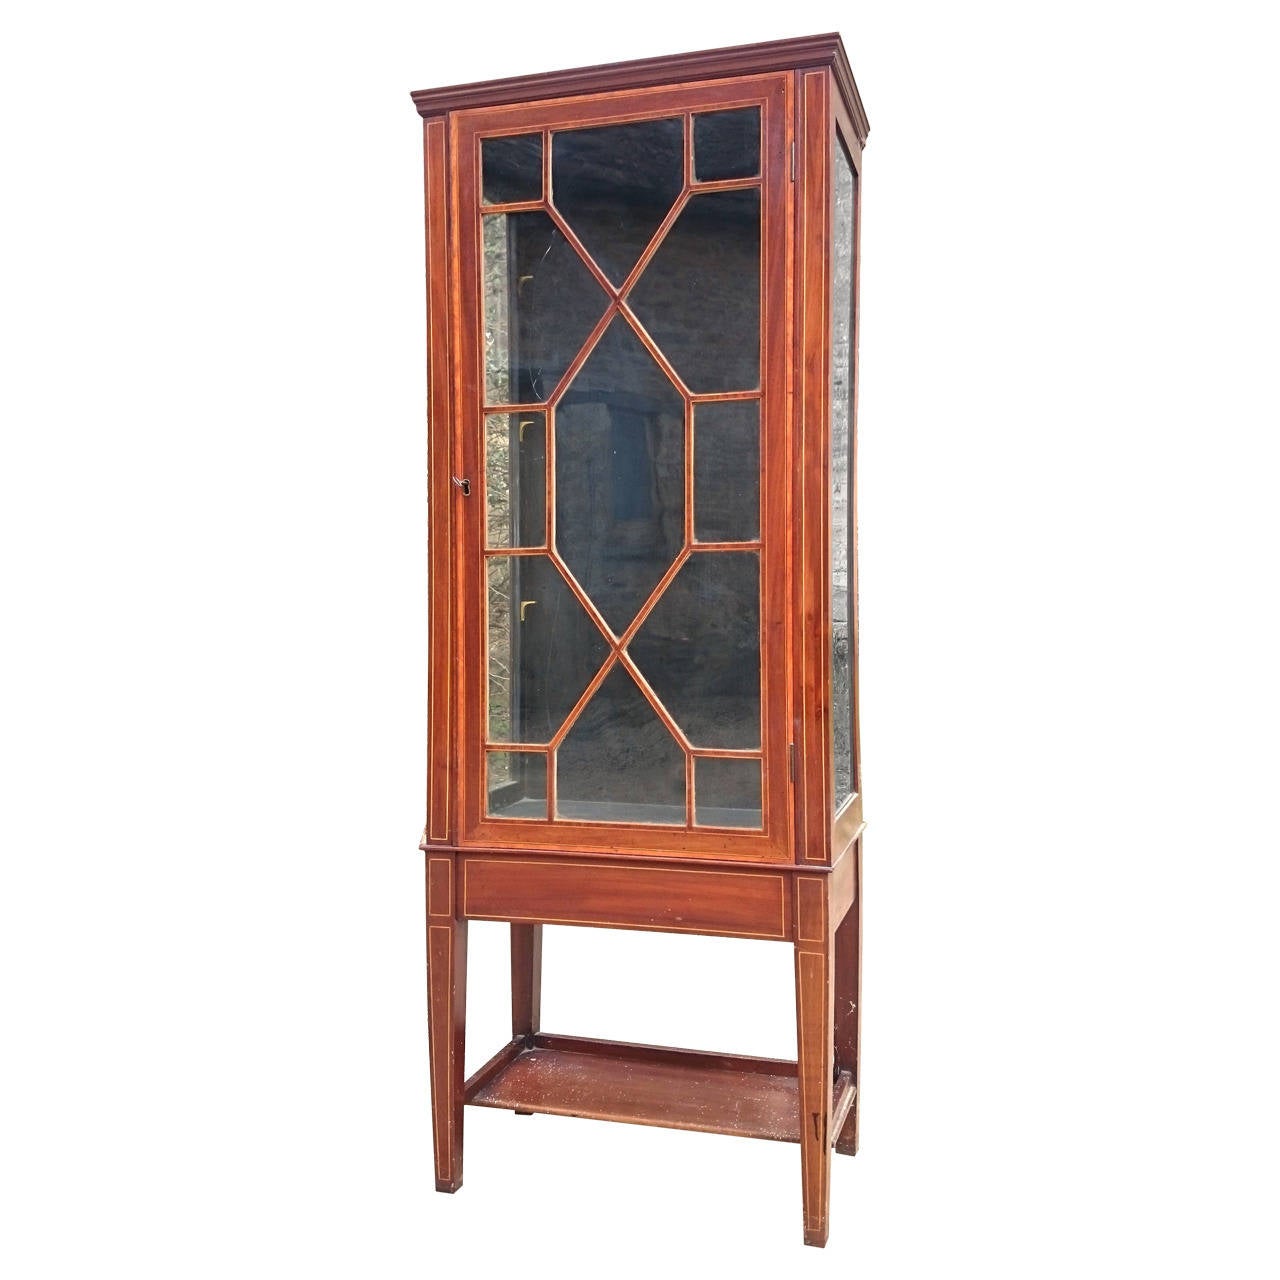 Antique Cabinet For Sale at 1stdibs